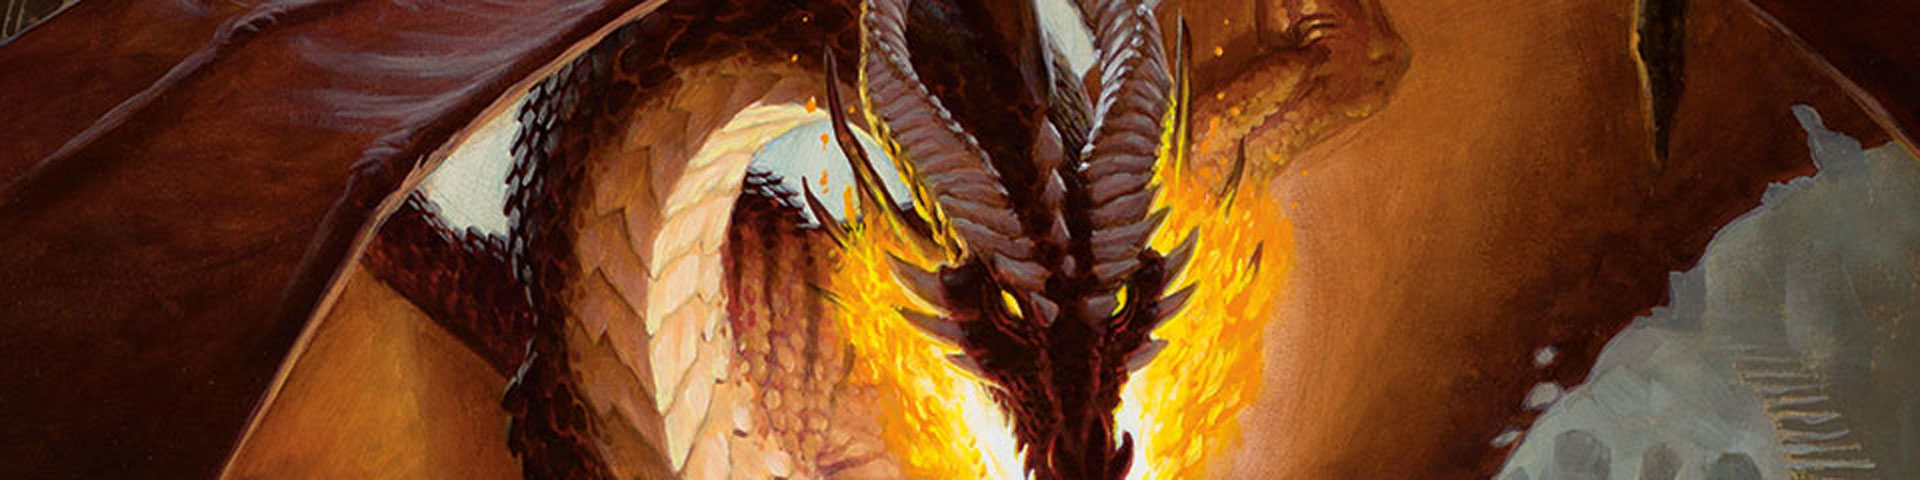 A red dragon prepares to breath fire.